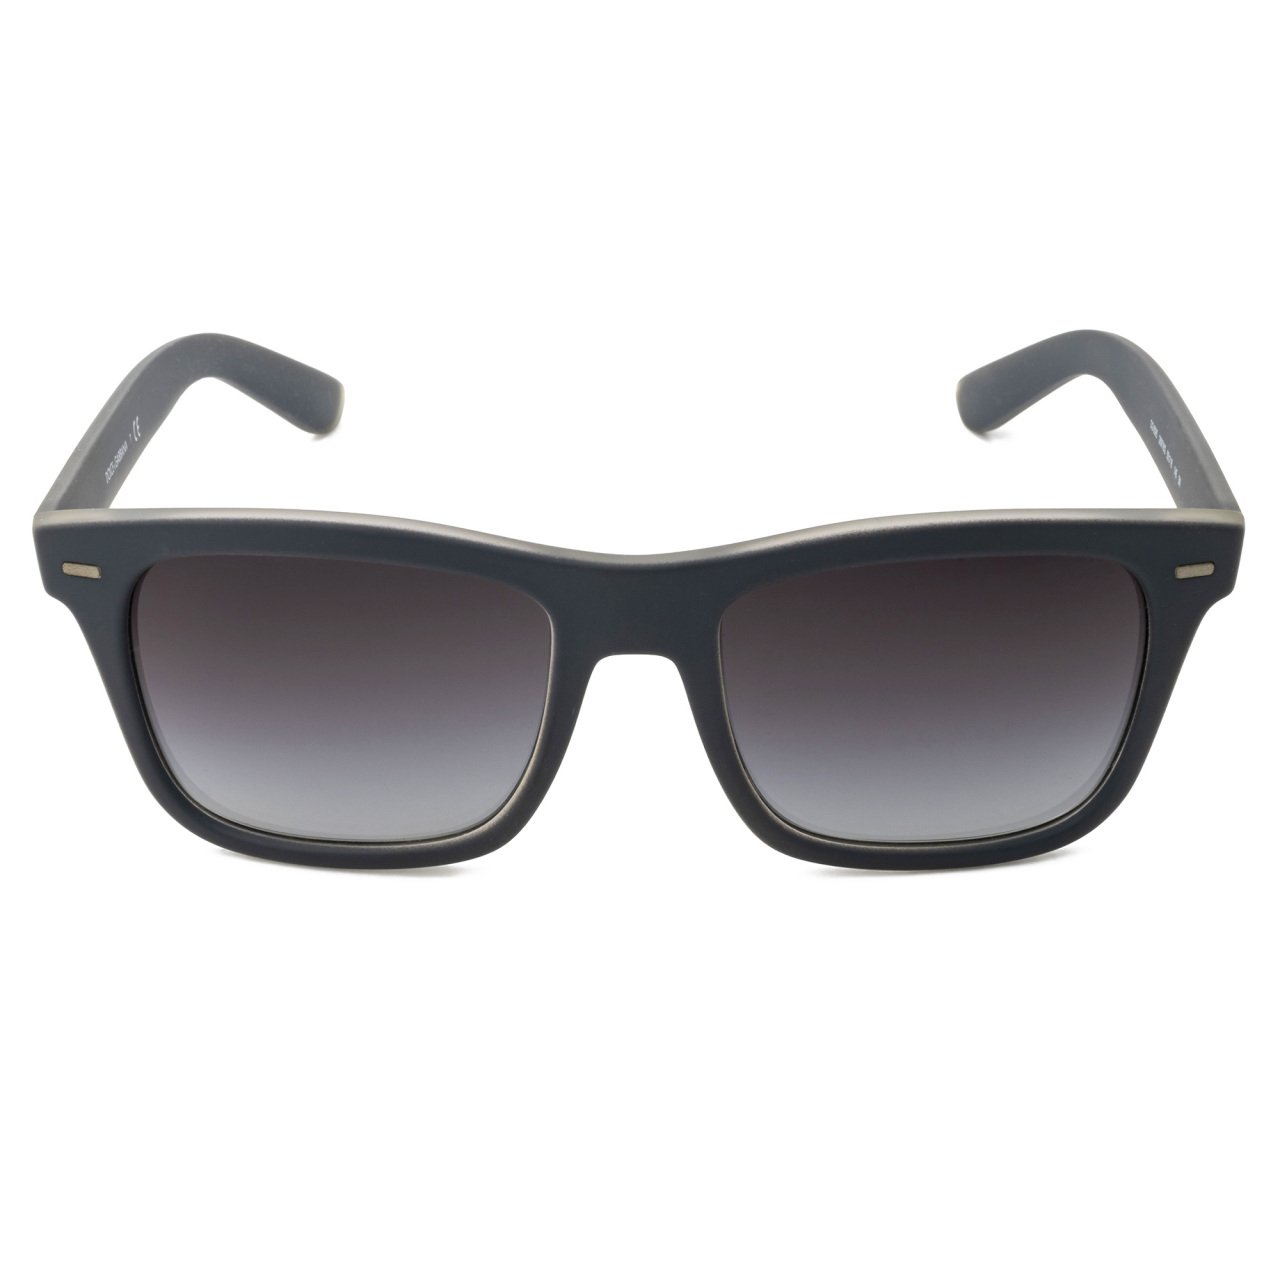 Dolce&Gabbana DG6095 Men's Sunglasses